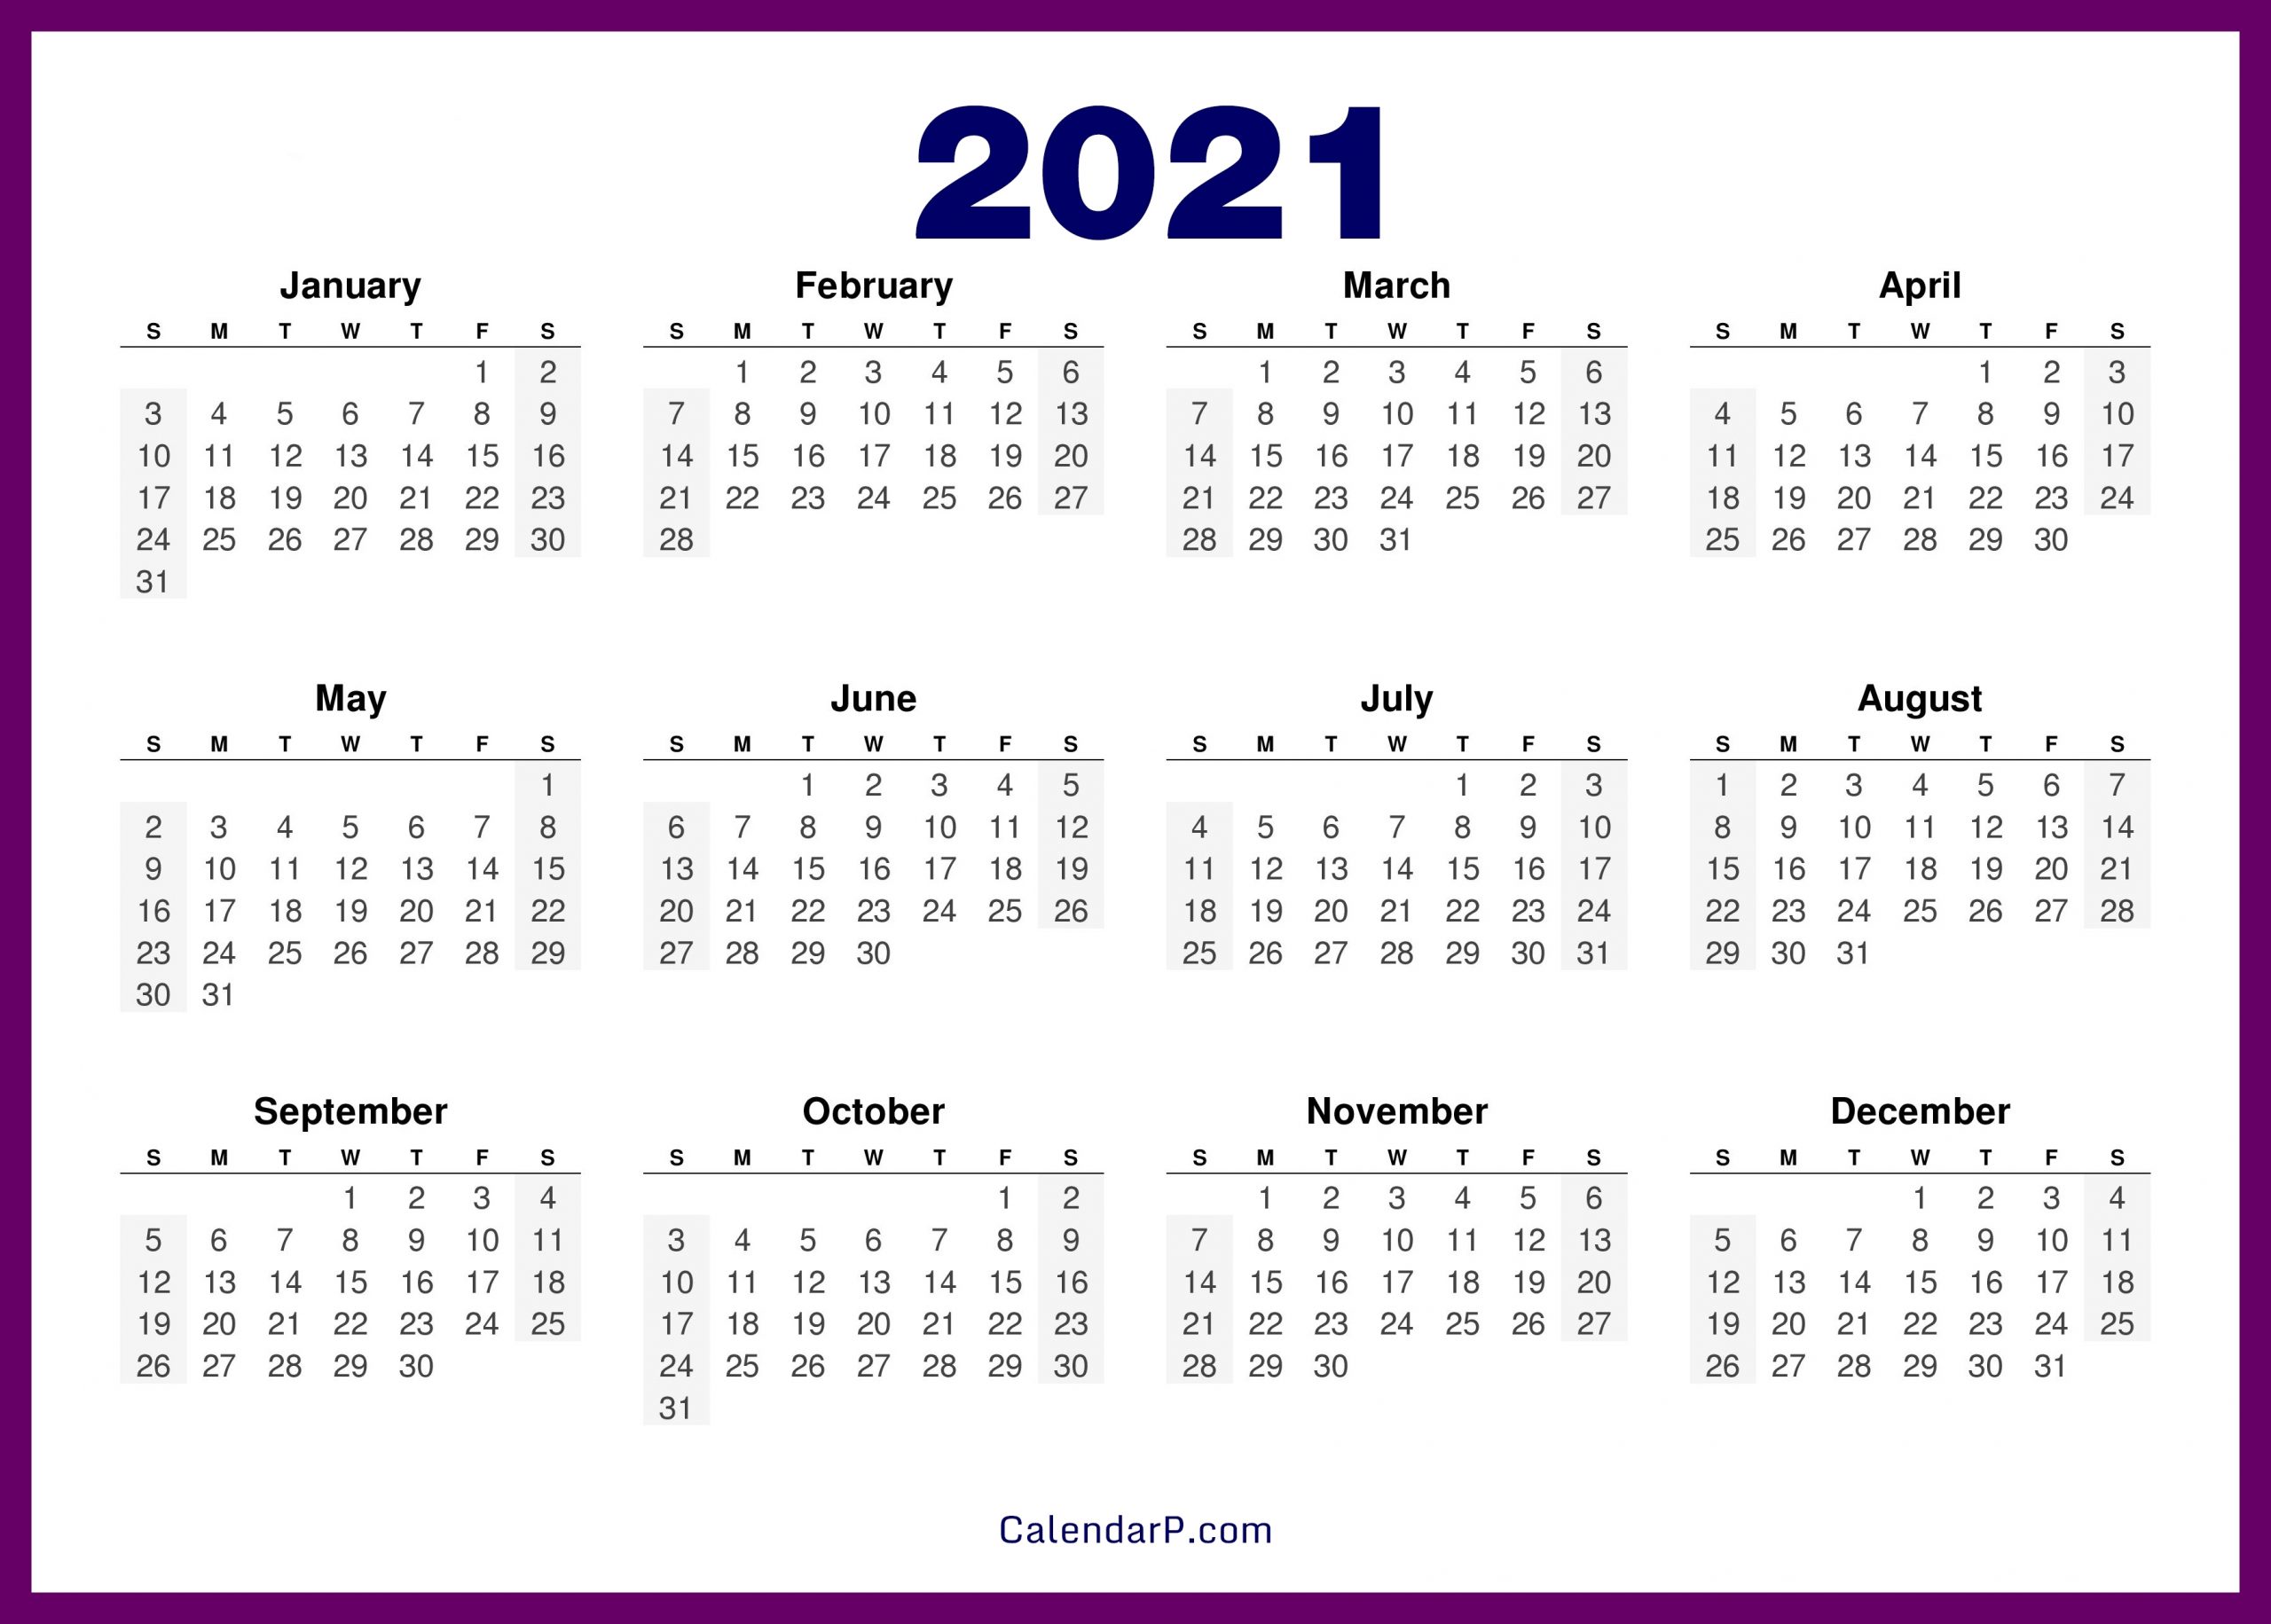 Catch 2021 Calendar Print Out